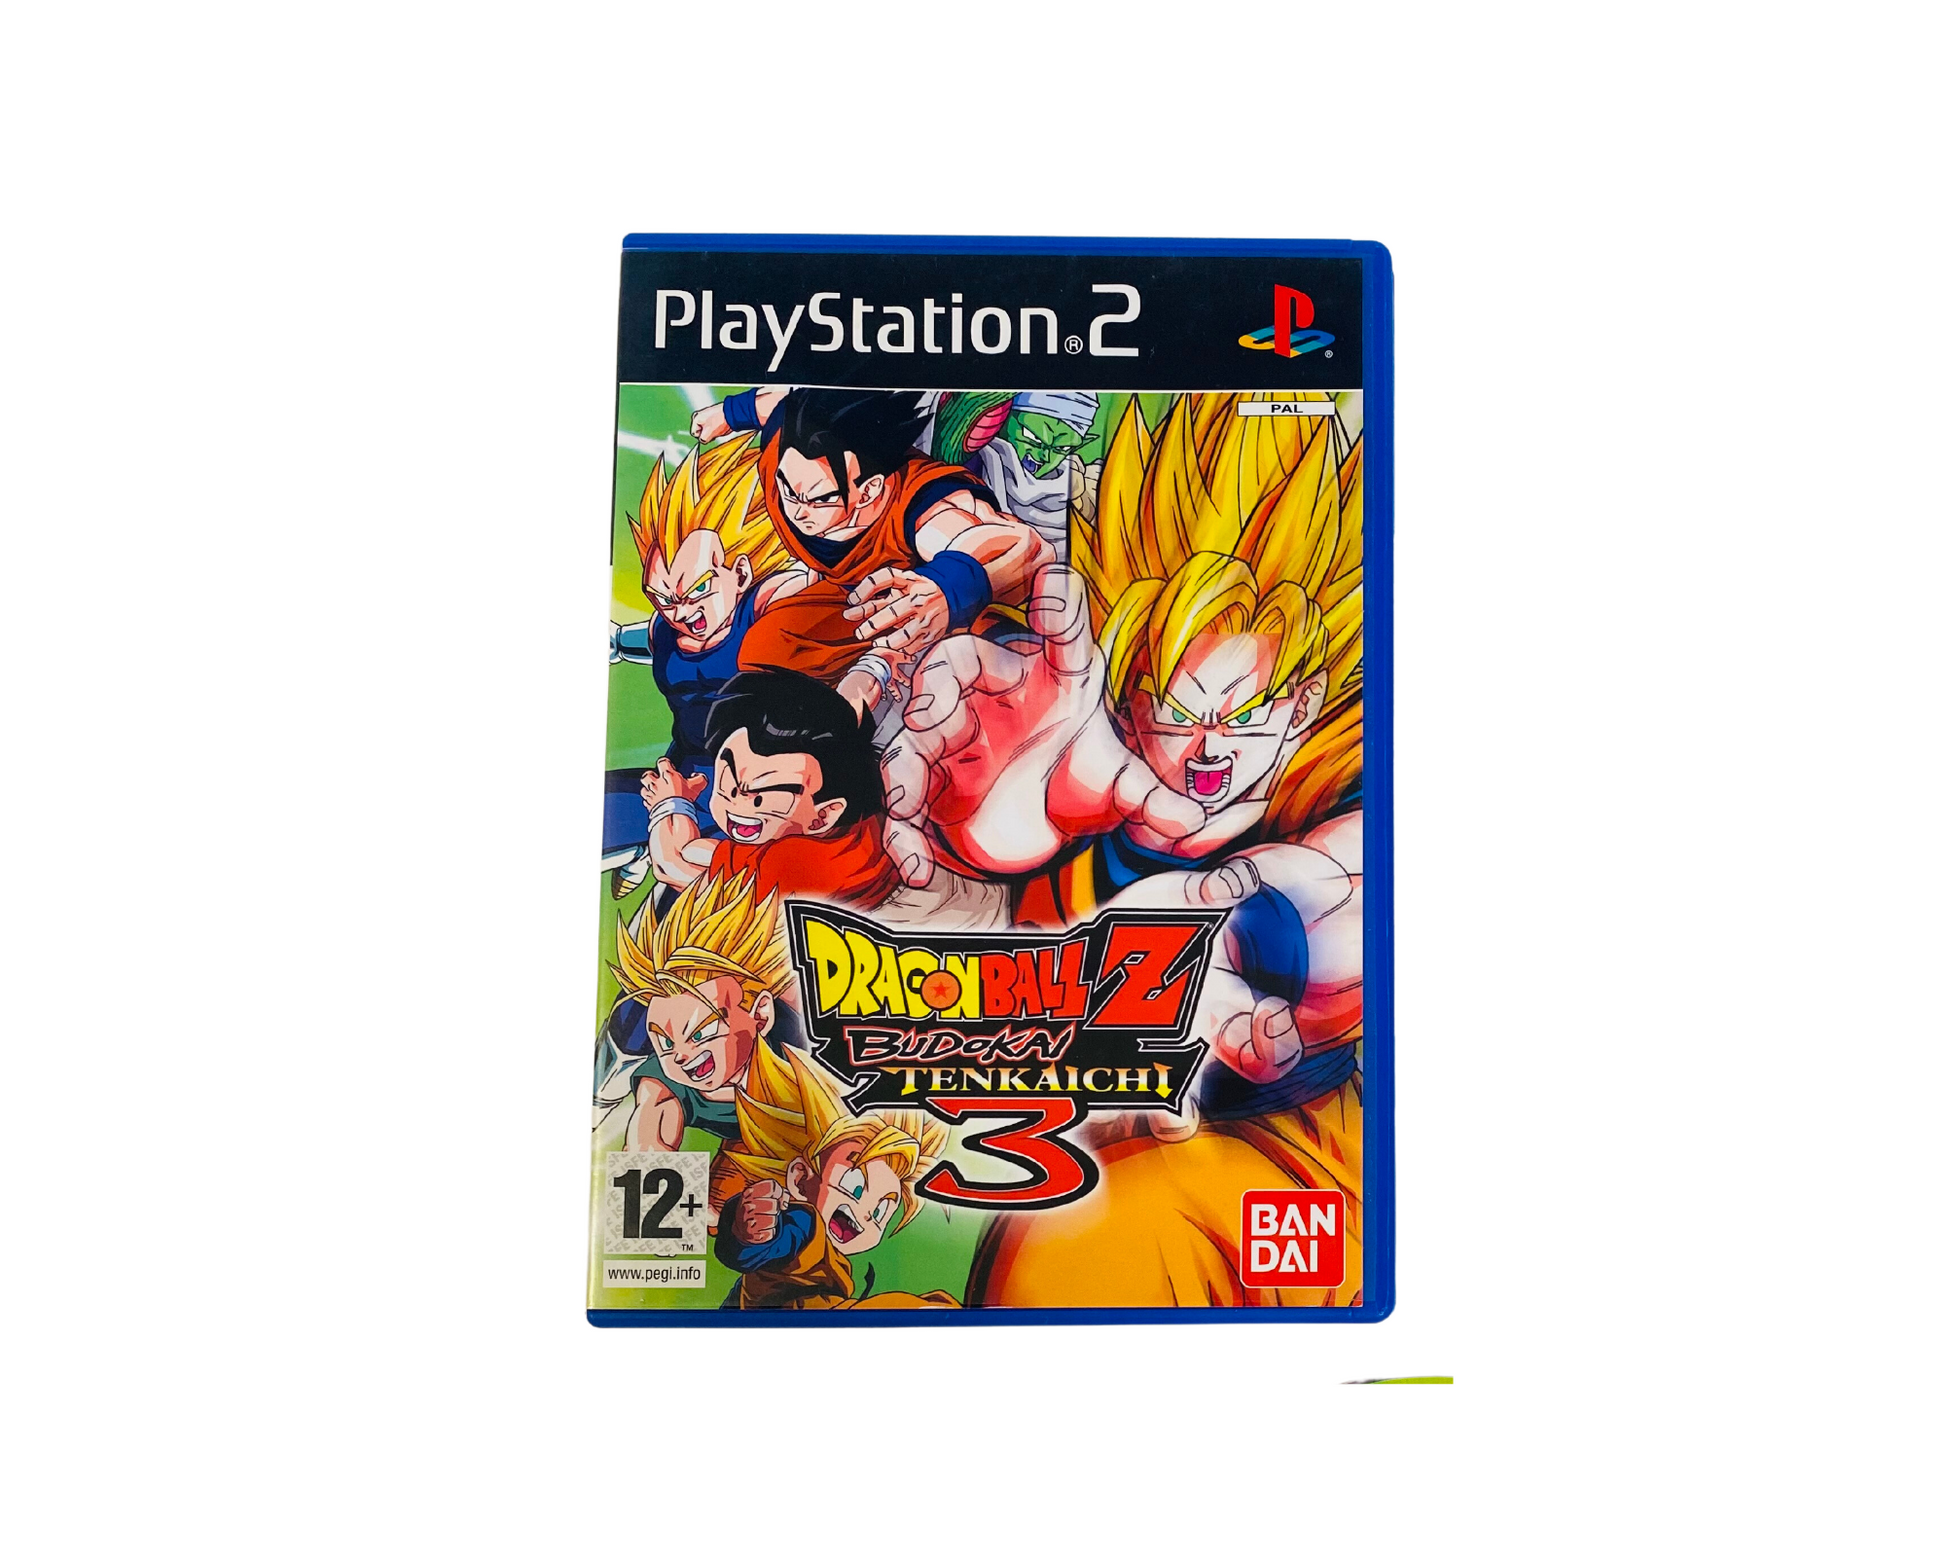 Dragon Ball Z: Budokai Tenkaichi 3 (PS2)